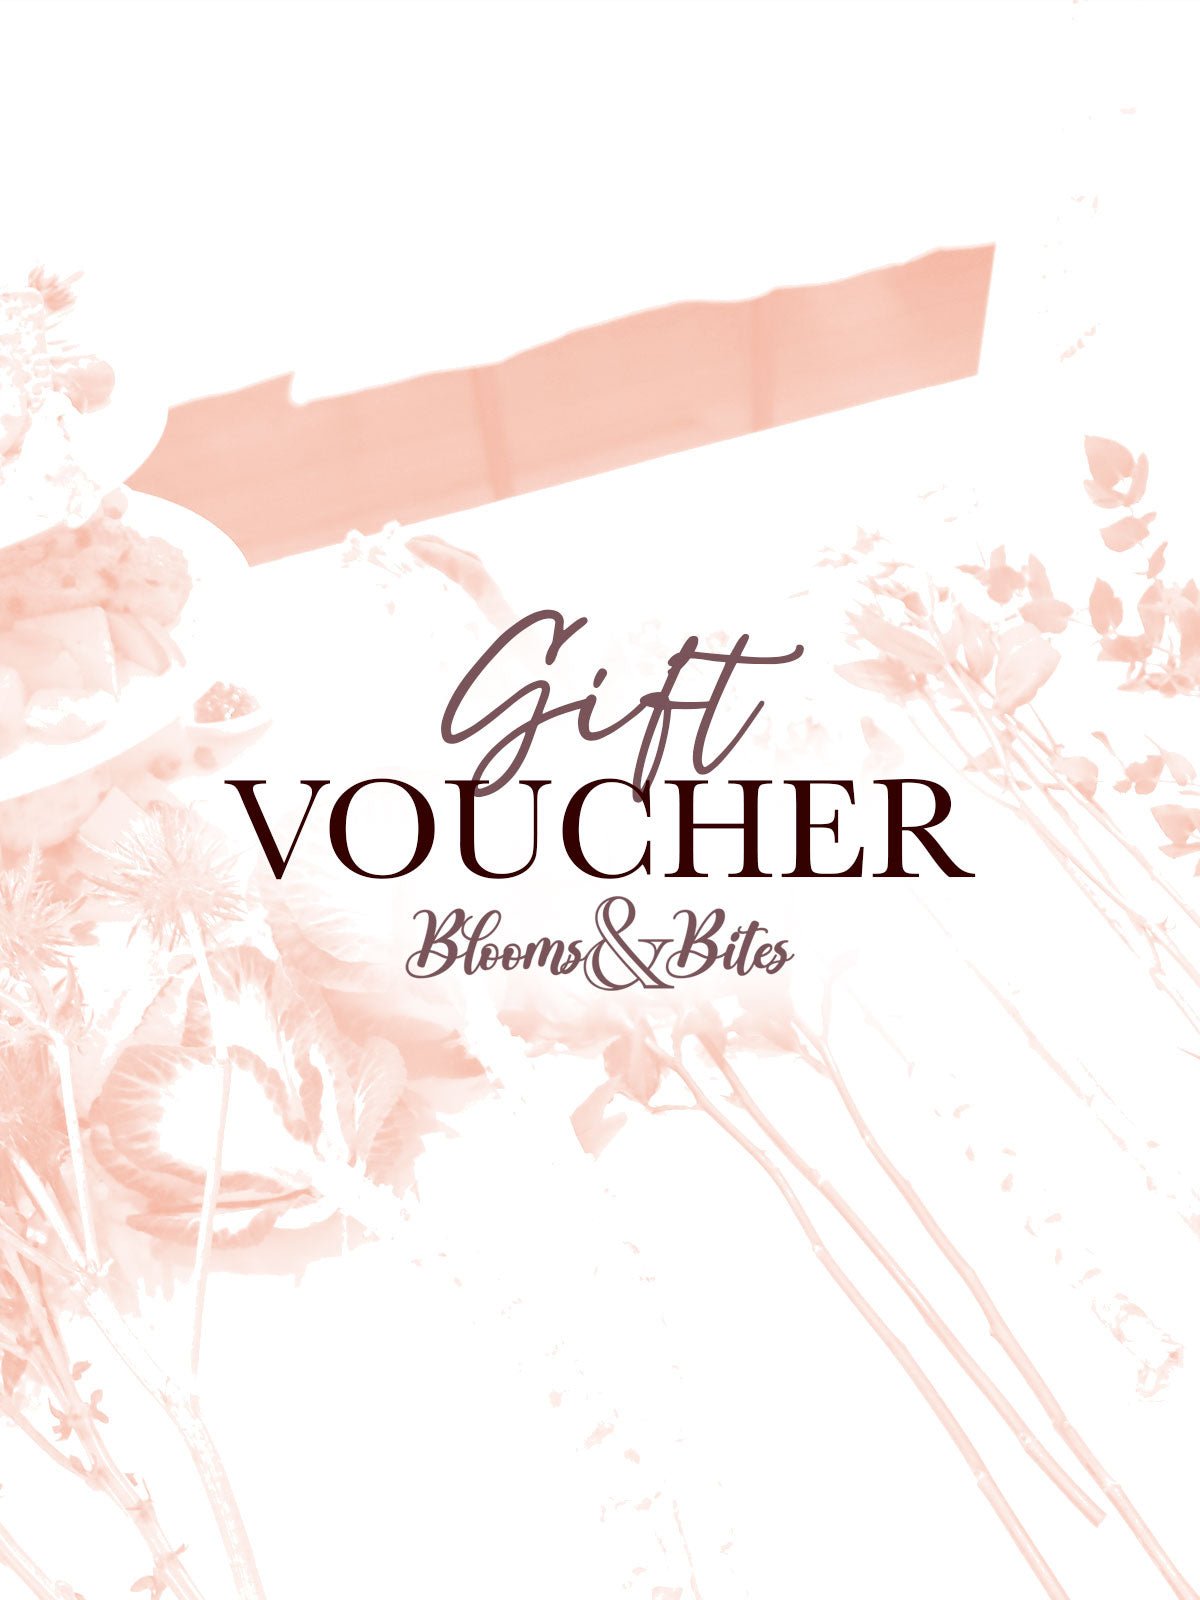 Blooms & Bites Voucher - Flower Making & High Tea - Amazing Graze Flowers